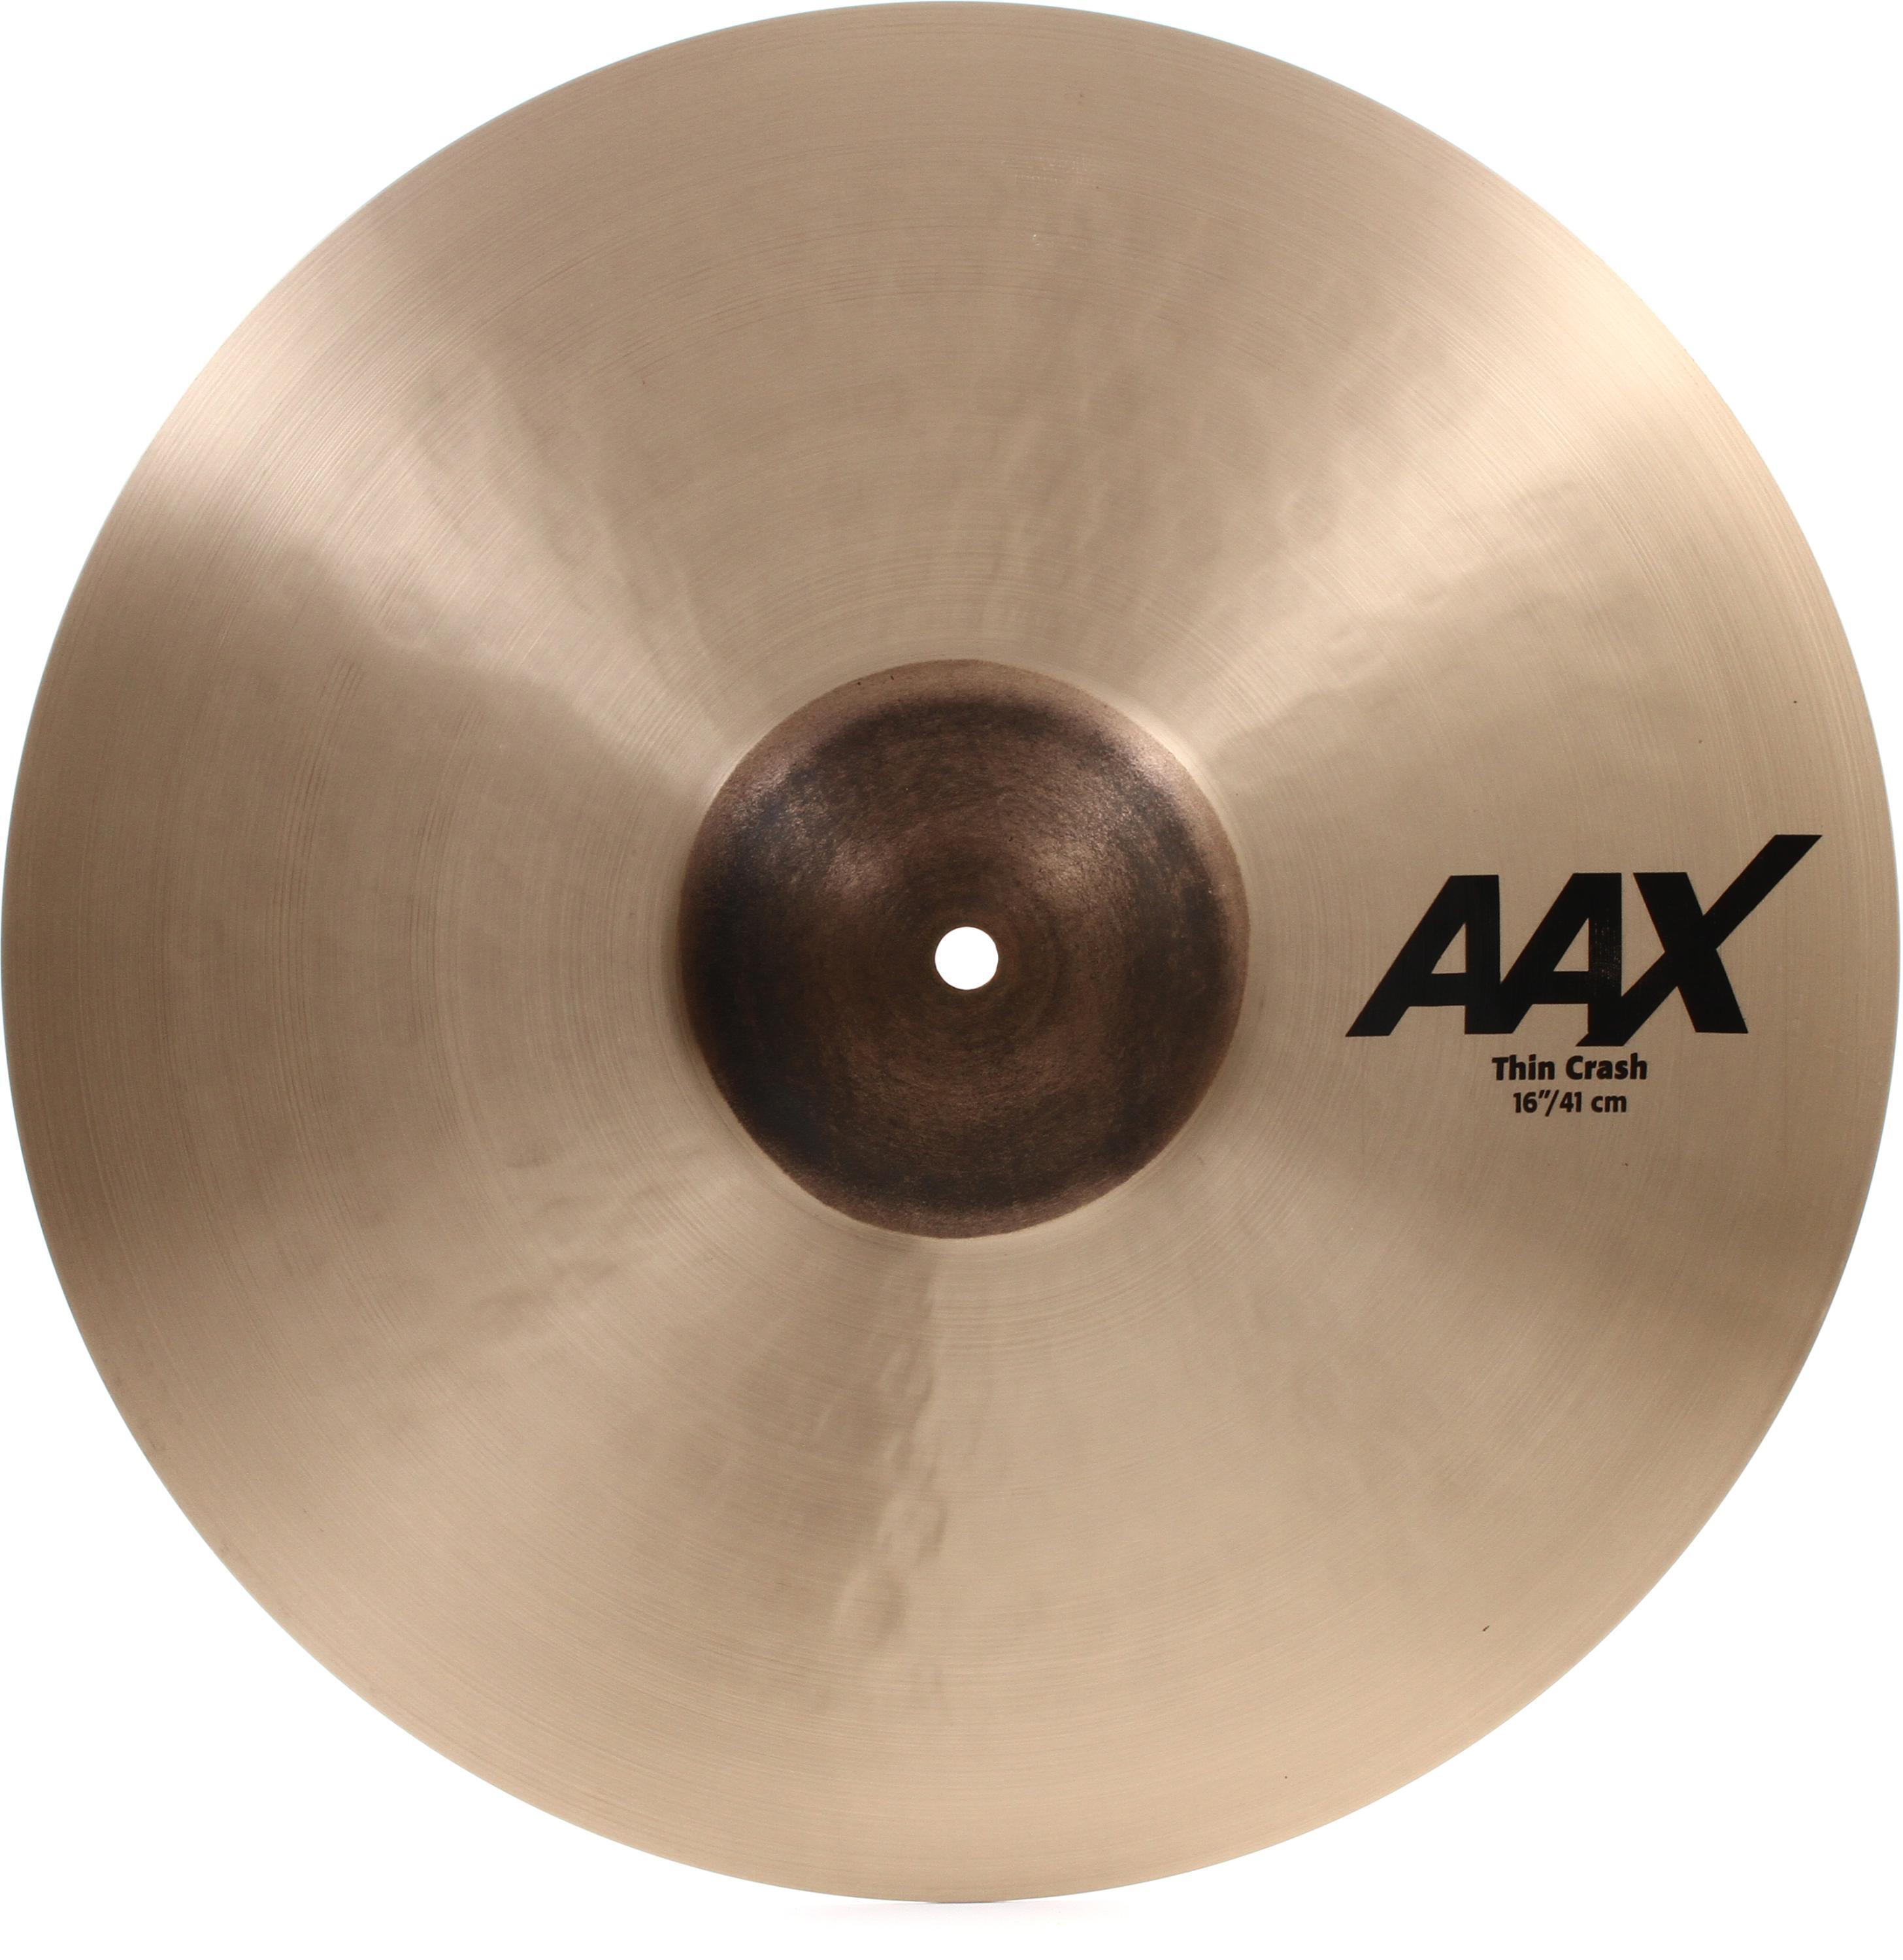 Sabian 16 inch AAX Thin Crash Cymbal | Sweetwater